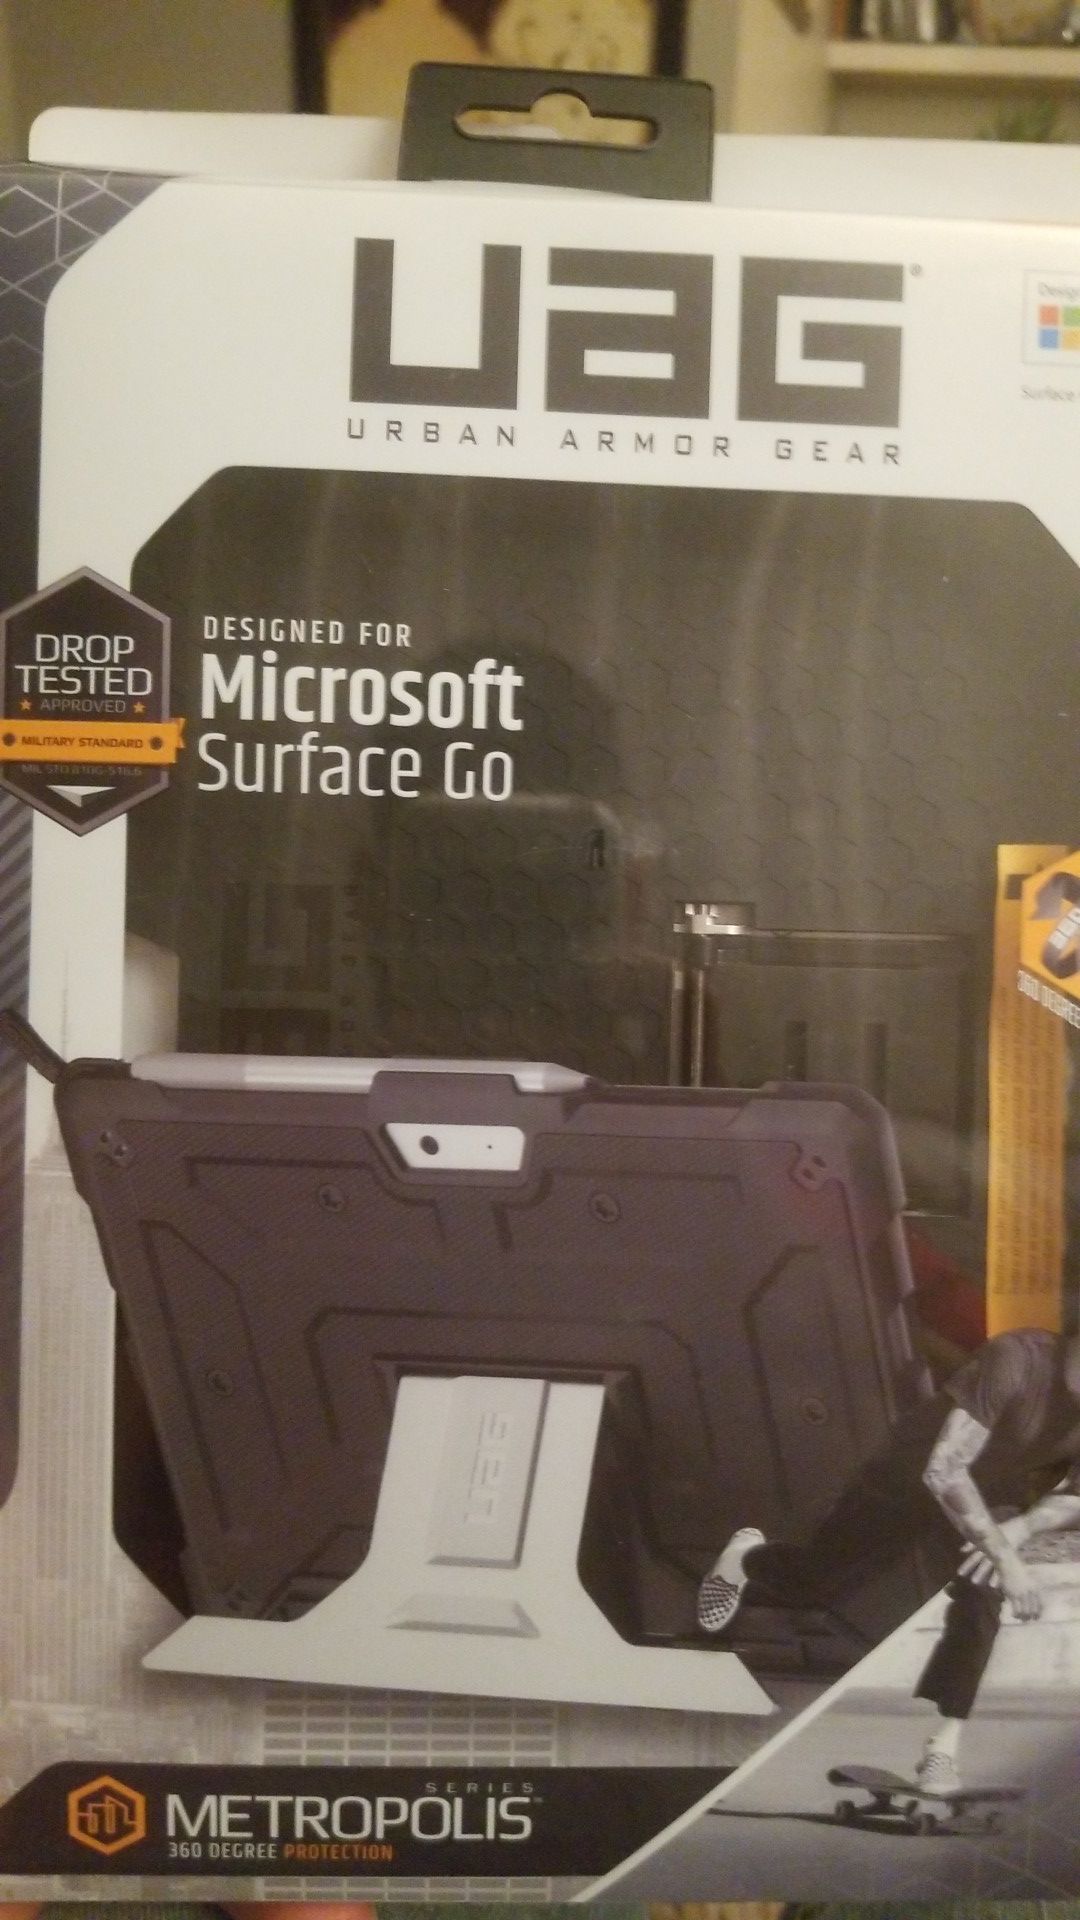 Urban armor gear for Microsoft surface